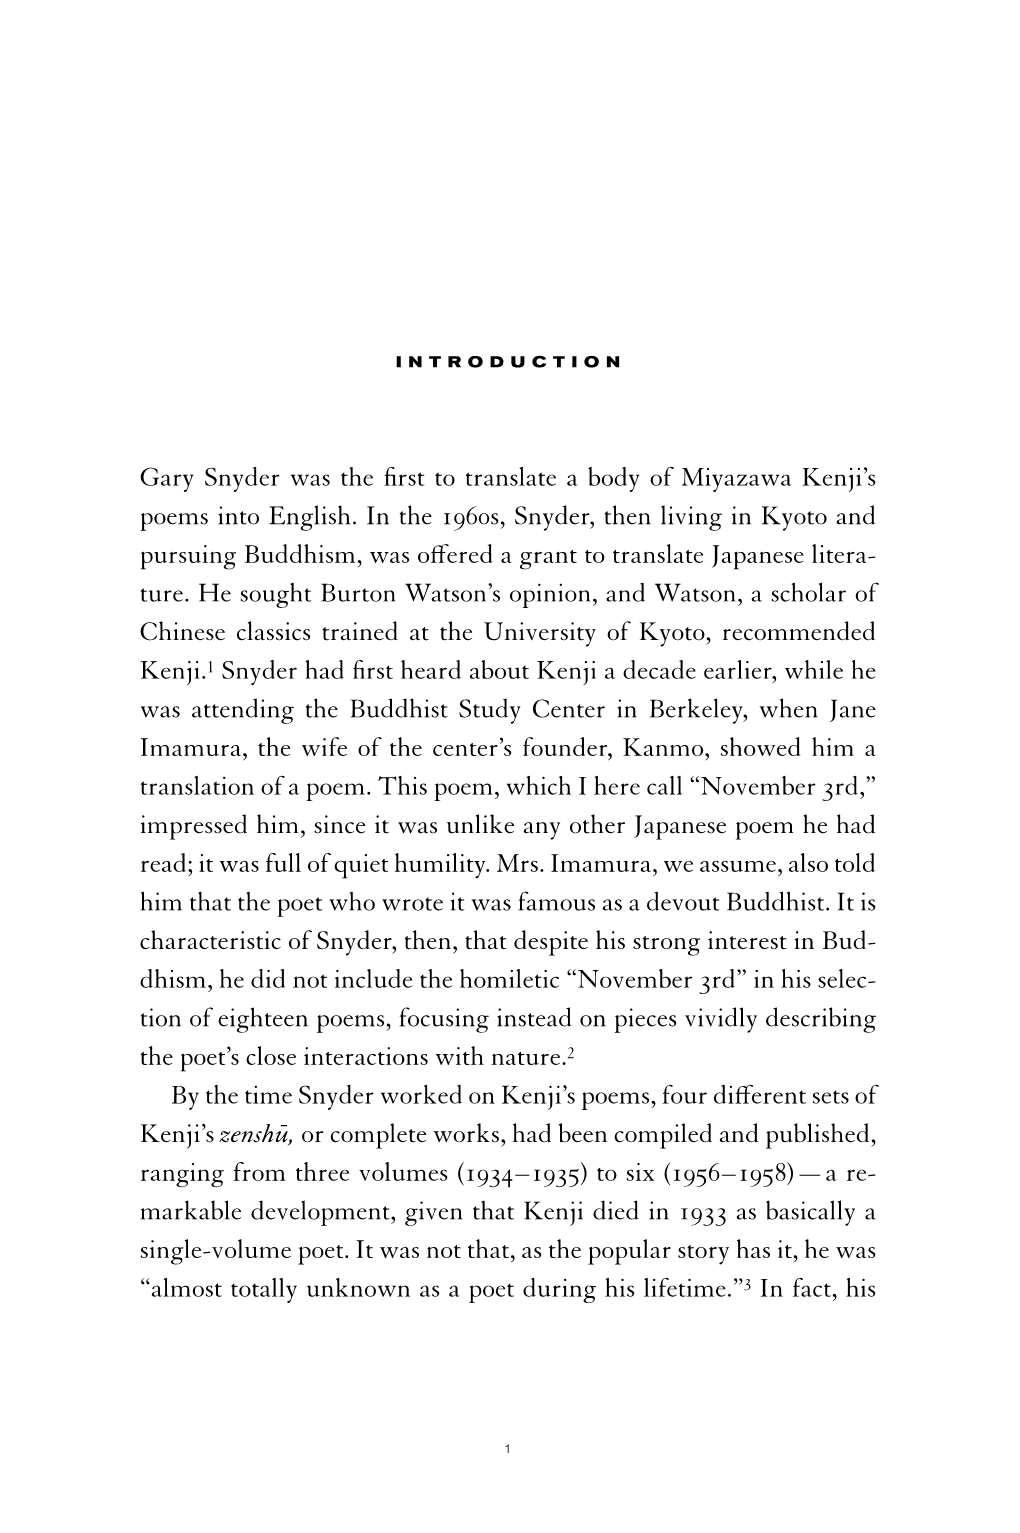 Gary Snyder Was the Wrst to Translate a Body of Miyazawa Kenji's Poems